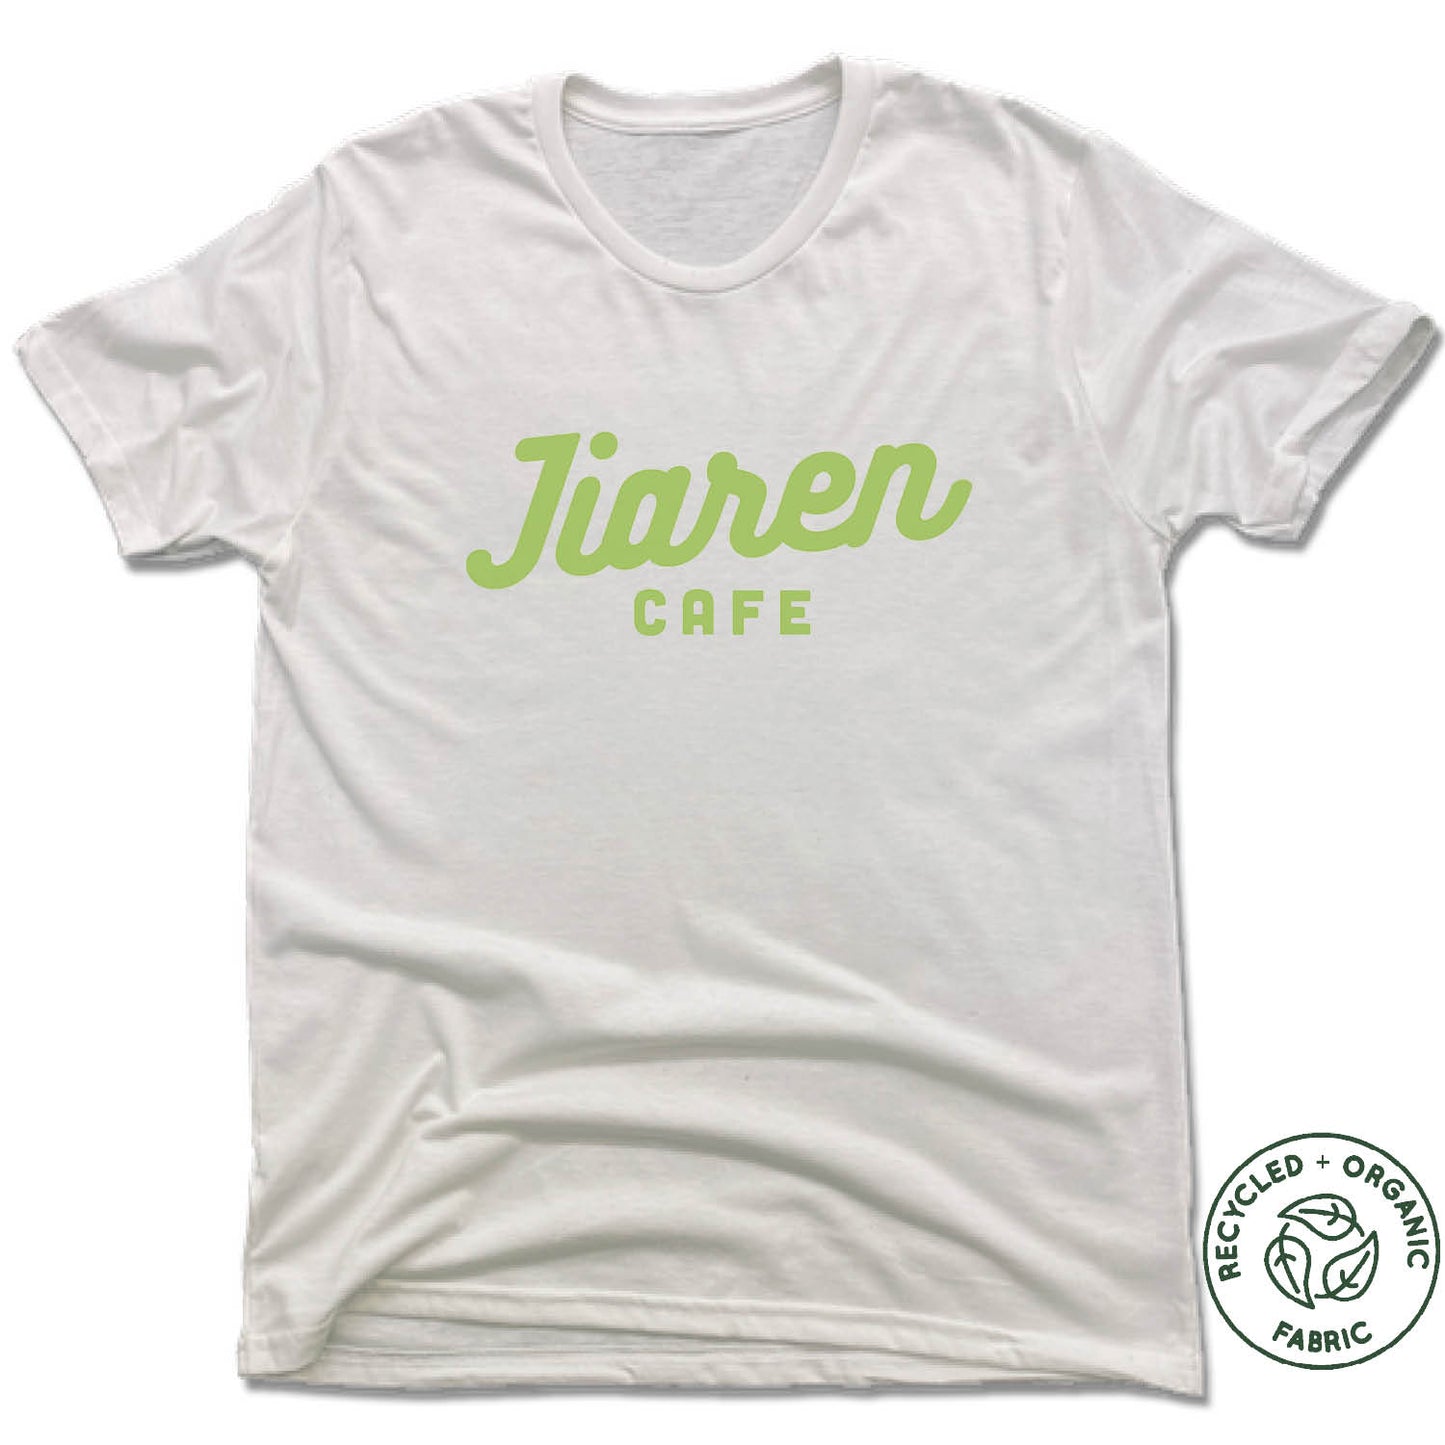 JIAREN CAFE | UNISEX WHITE Recycled Tri-Blend | GREEN LOGO